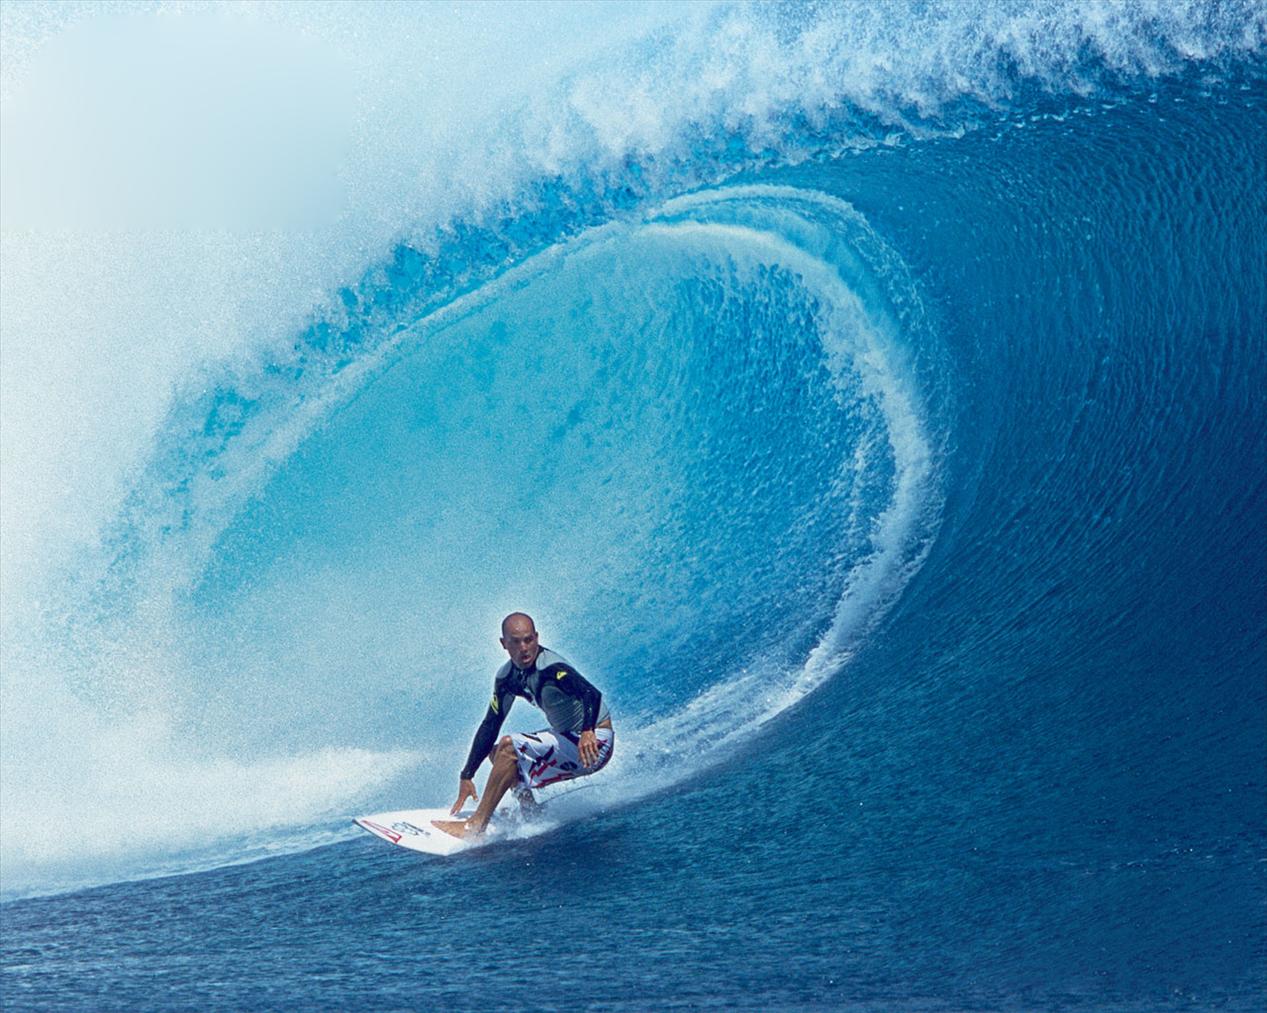  Gambar  Gambar  Berselancar Surfing di Lautan wallpaper 